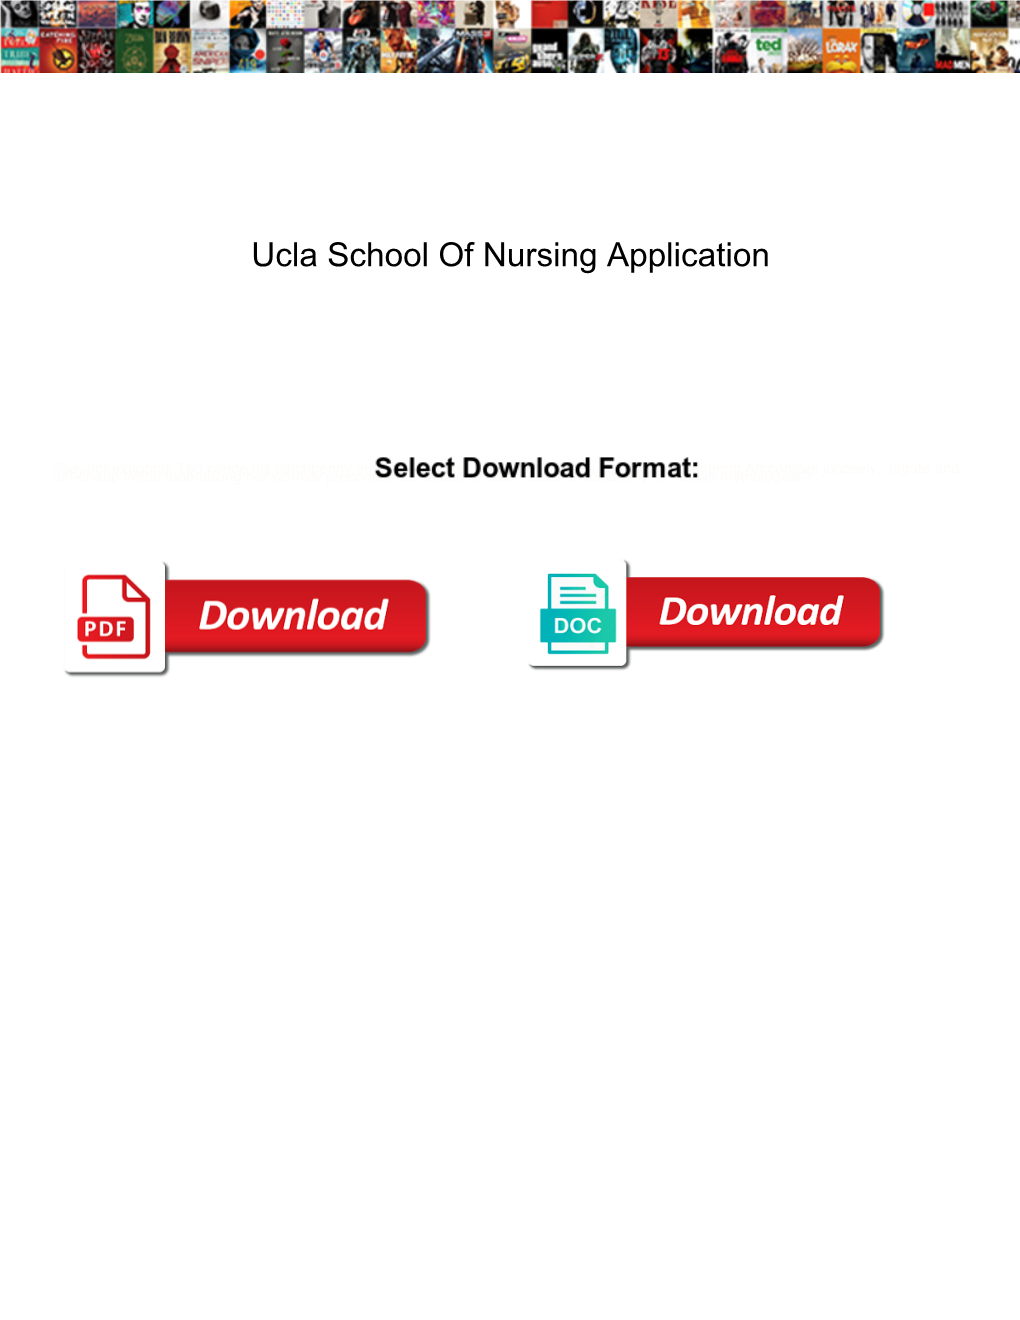 Ucla School of Nursing Application